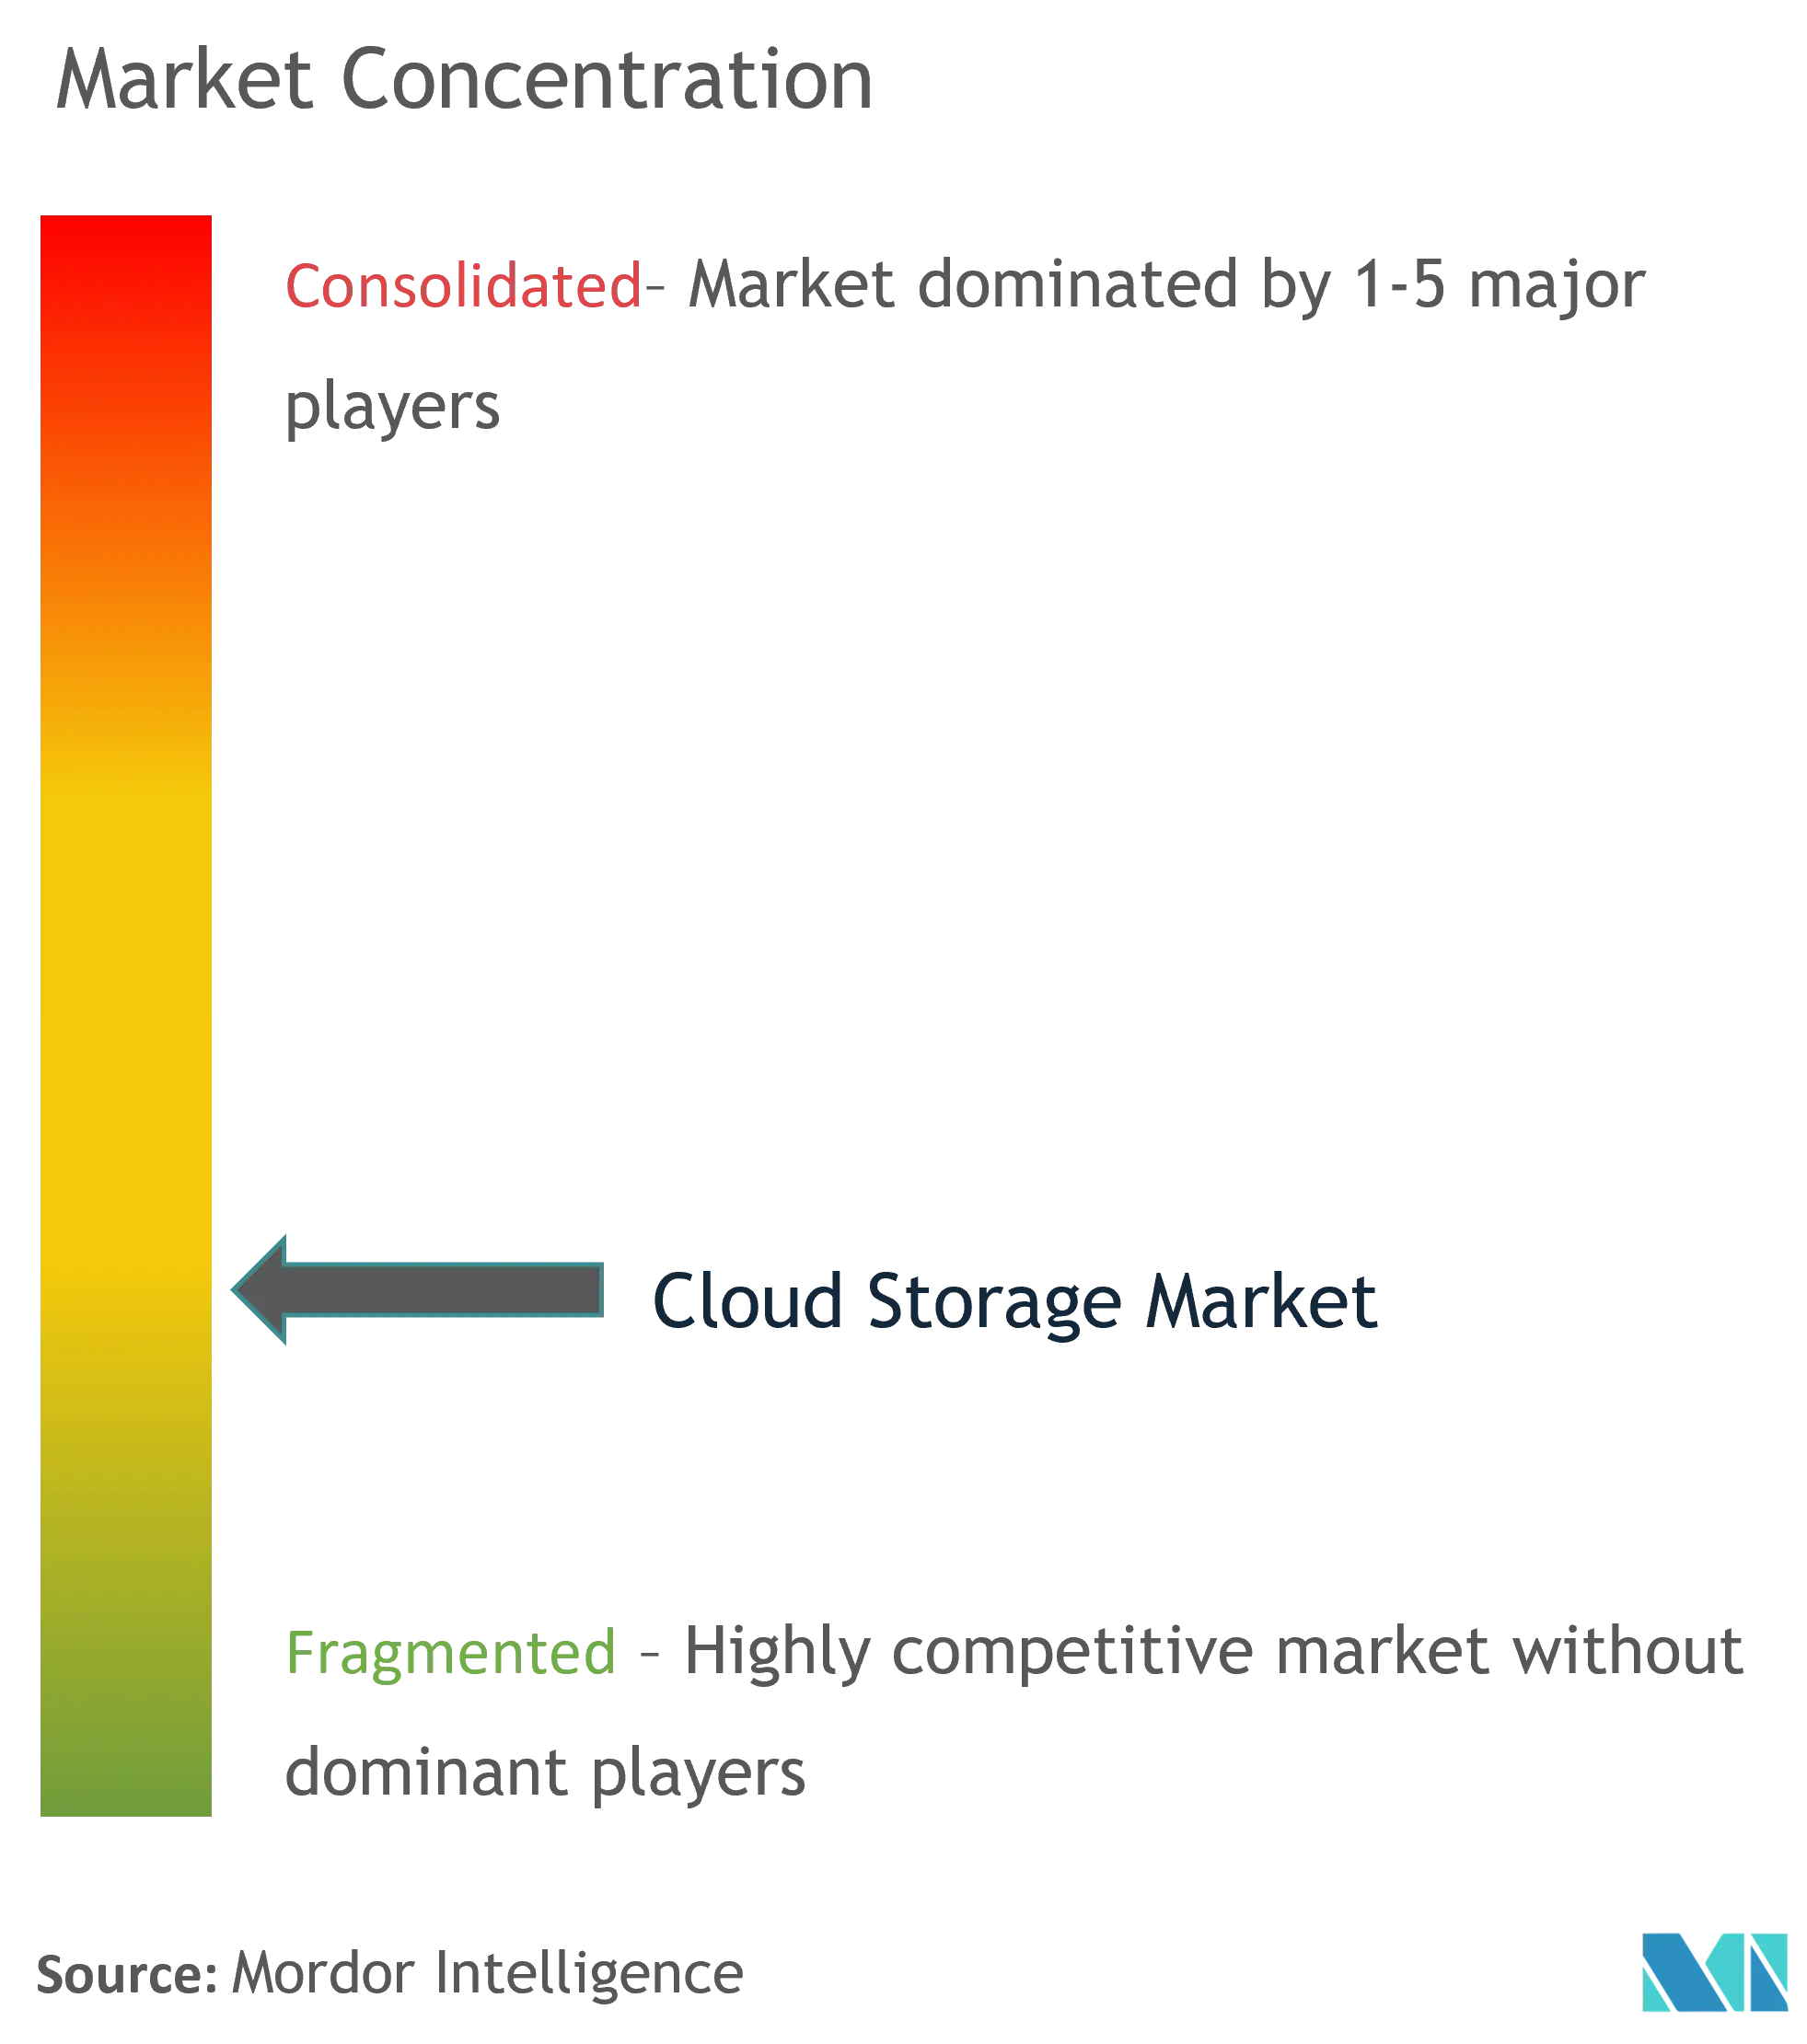 Cloud Storage Market - Market Concentration.png